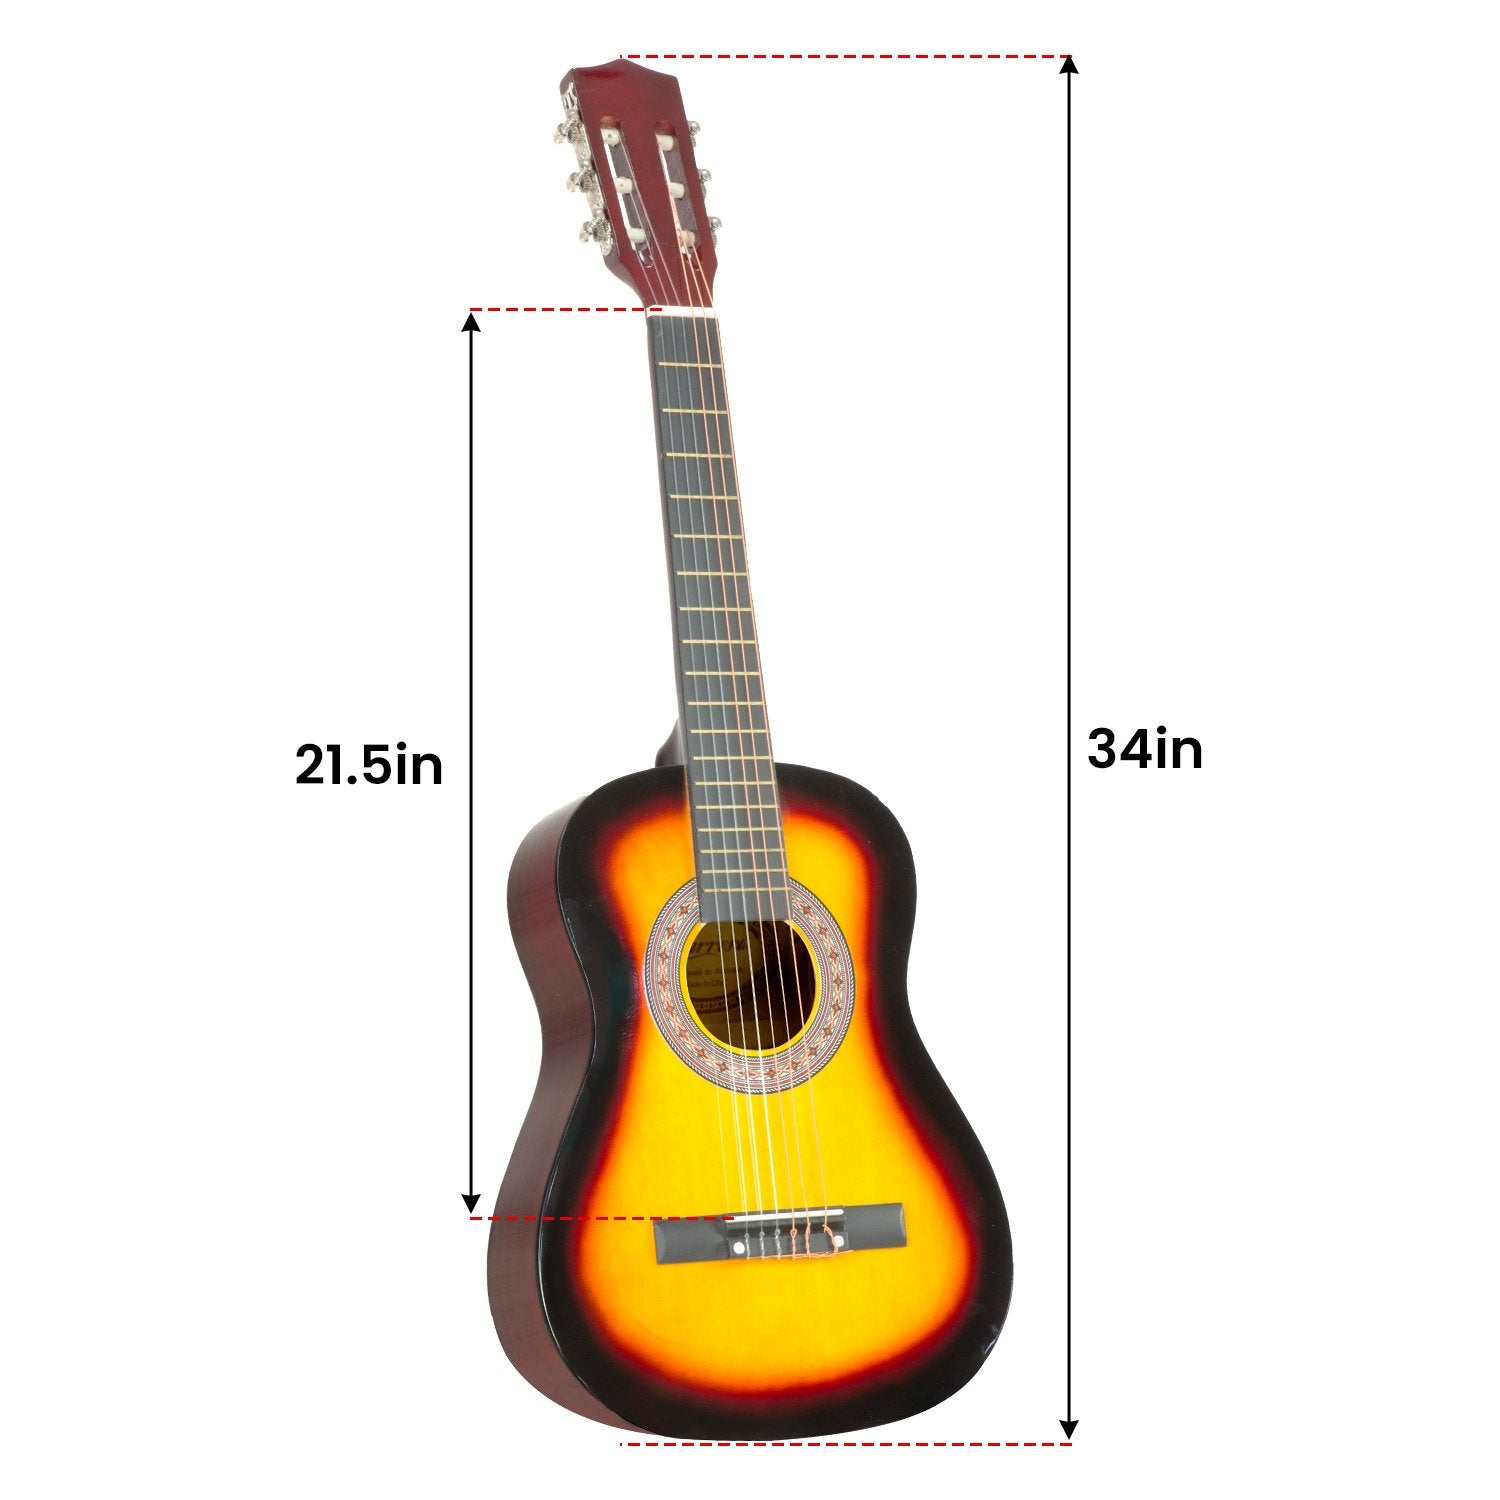 34in Acoustic Wooden Childrens Guitar - Sunburst